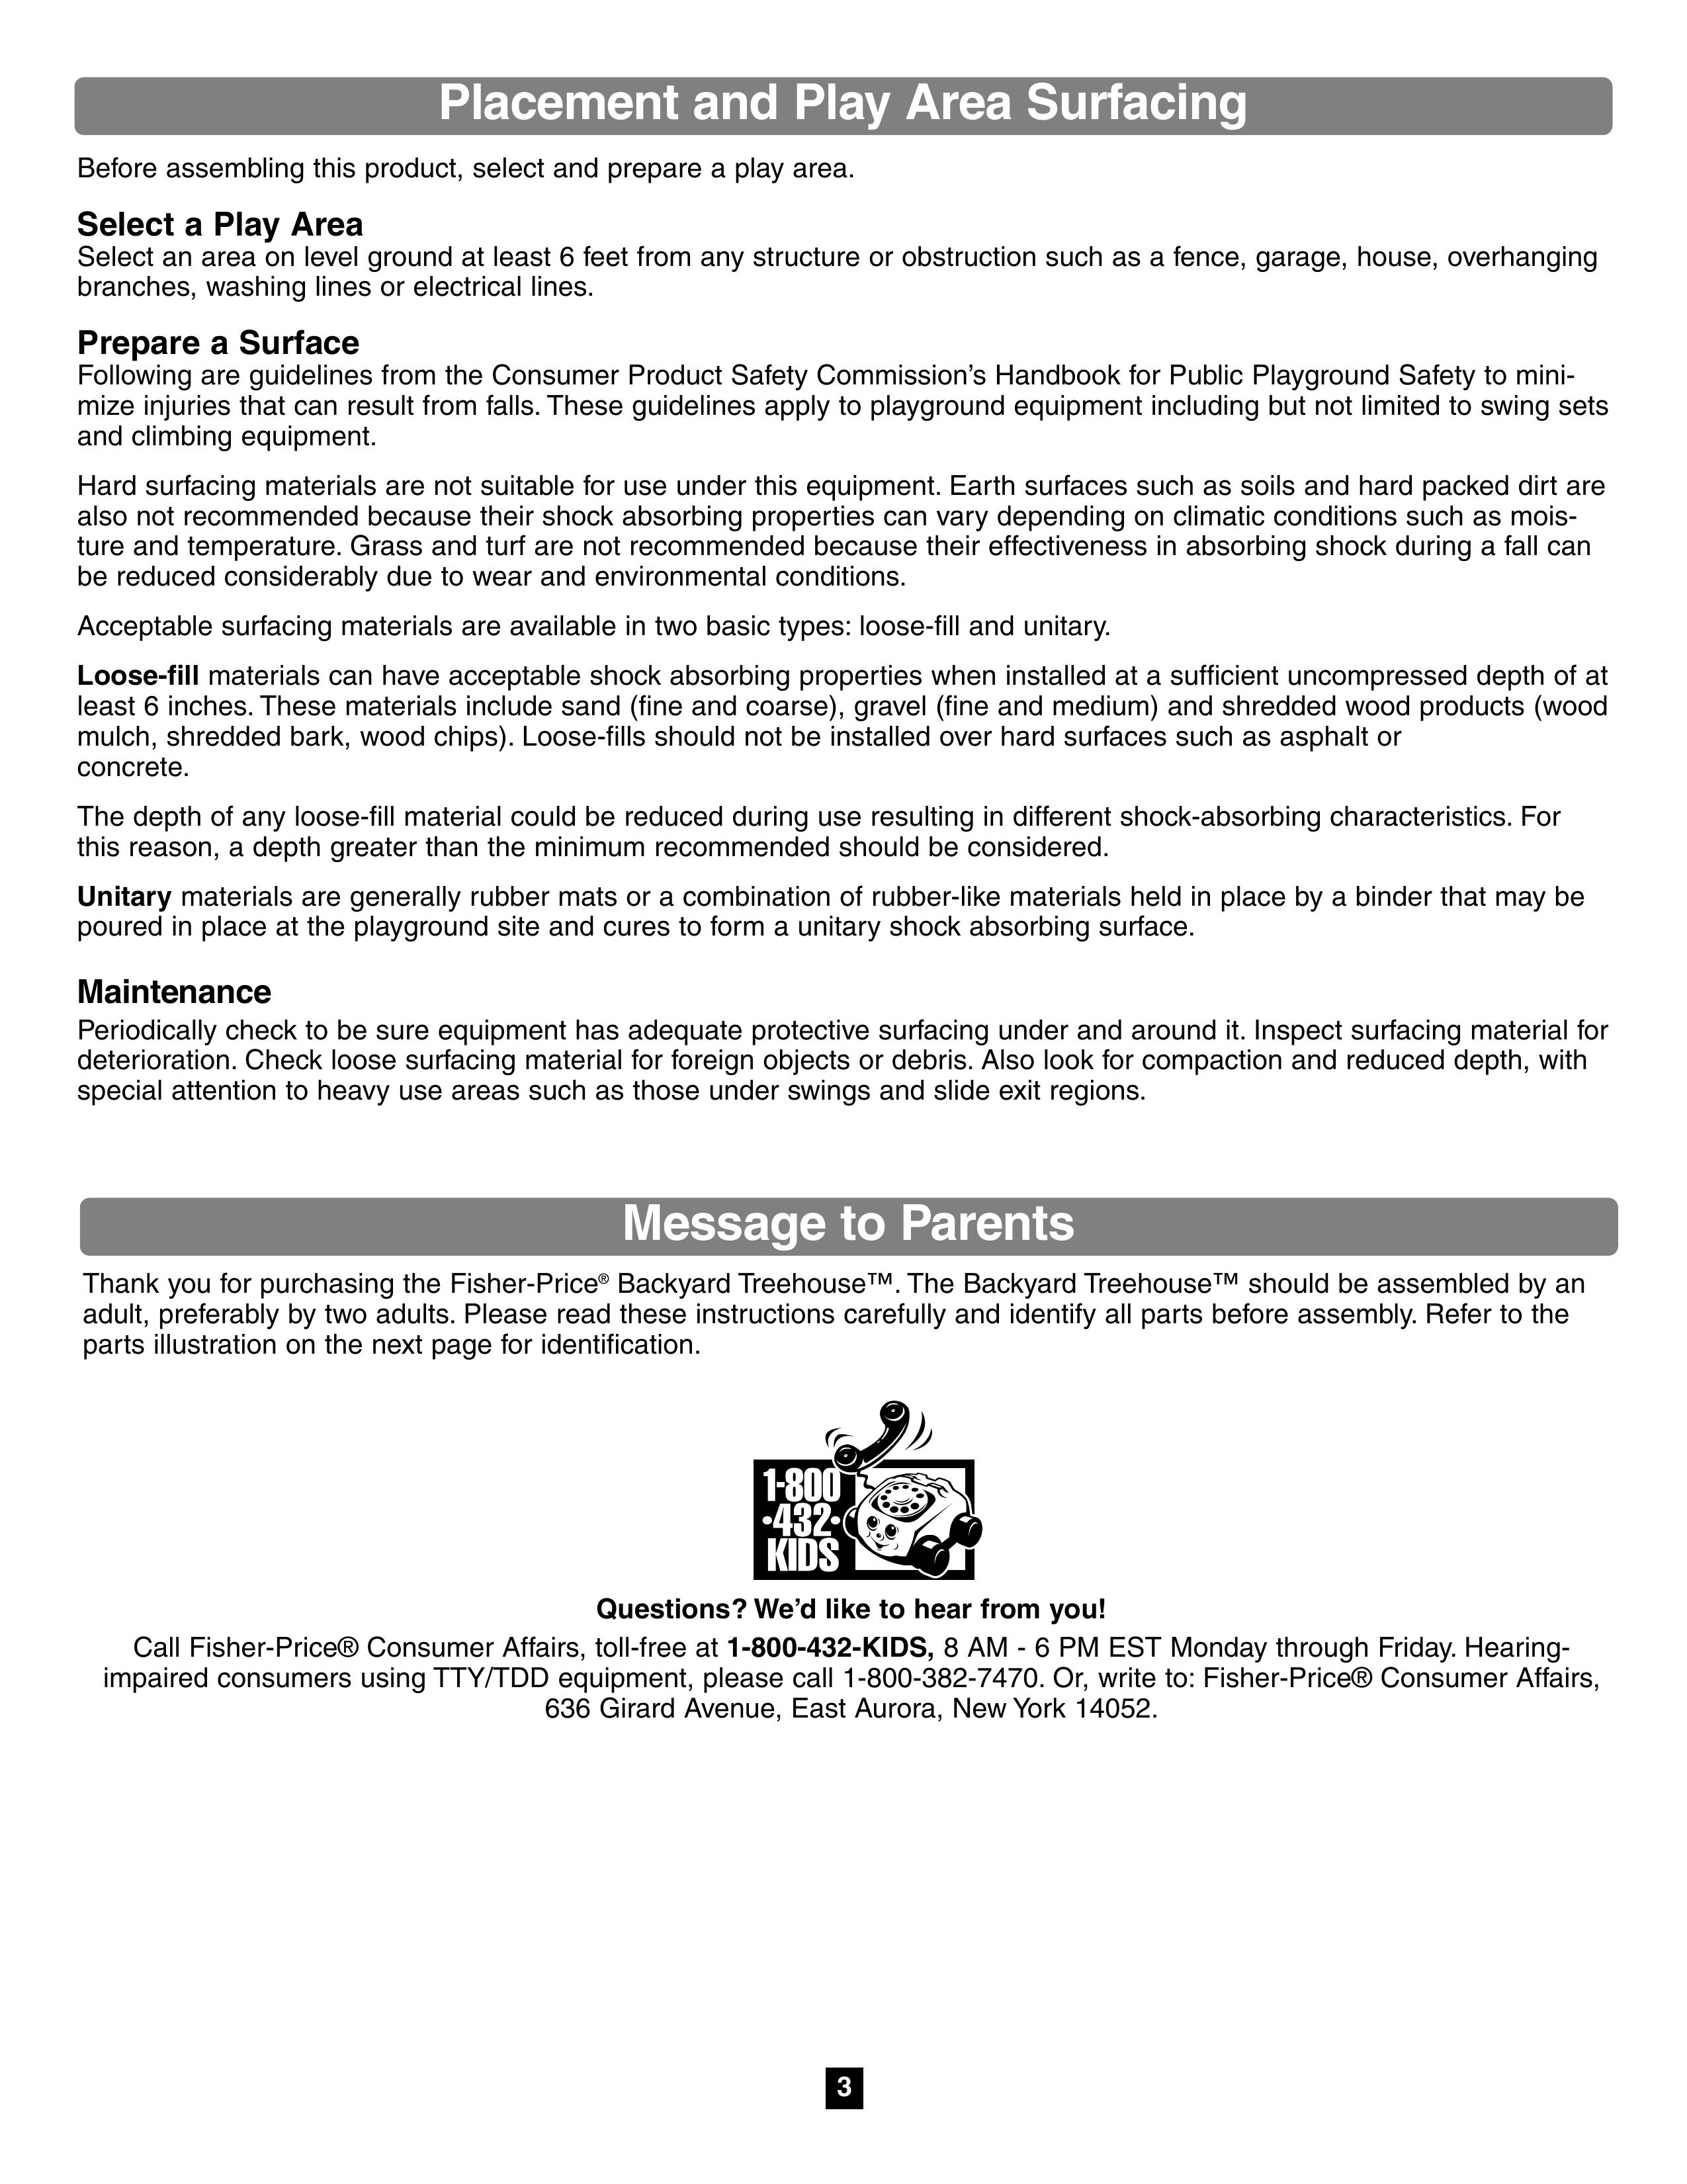 Fisher-Price 75972 Backyard Playset User Manual (Page 3)